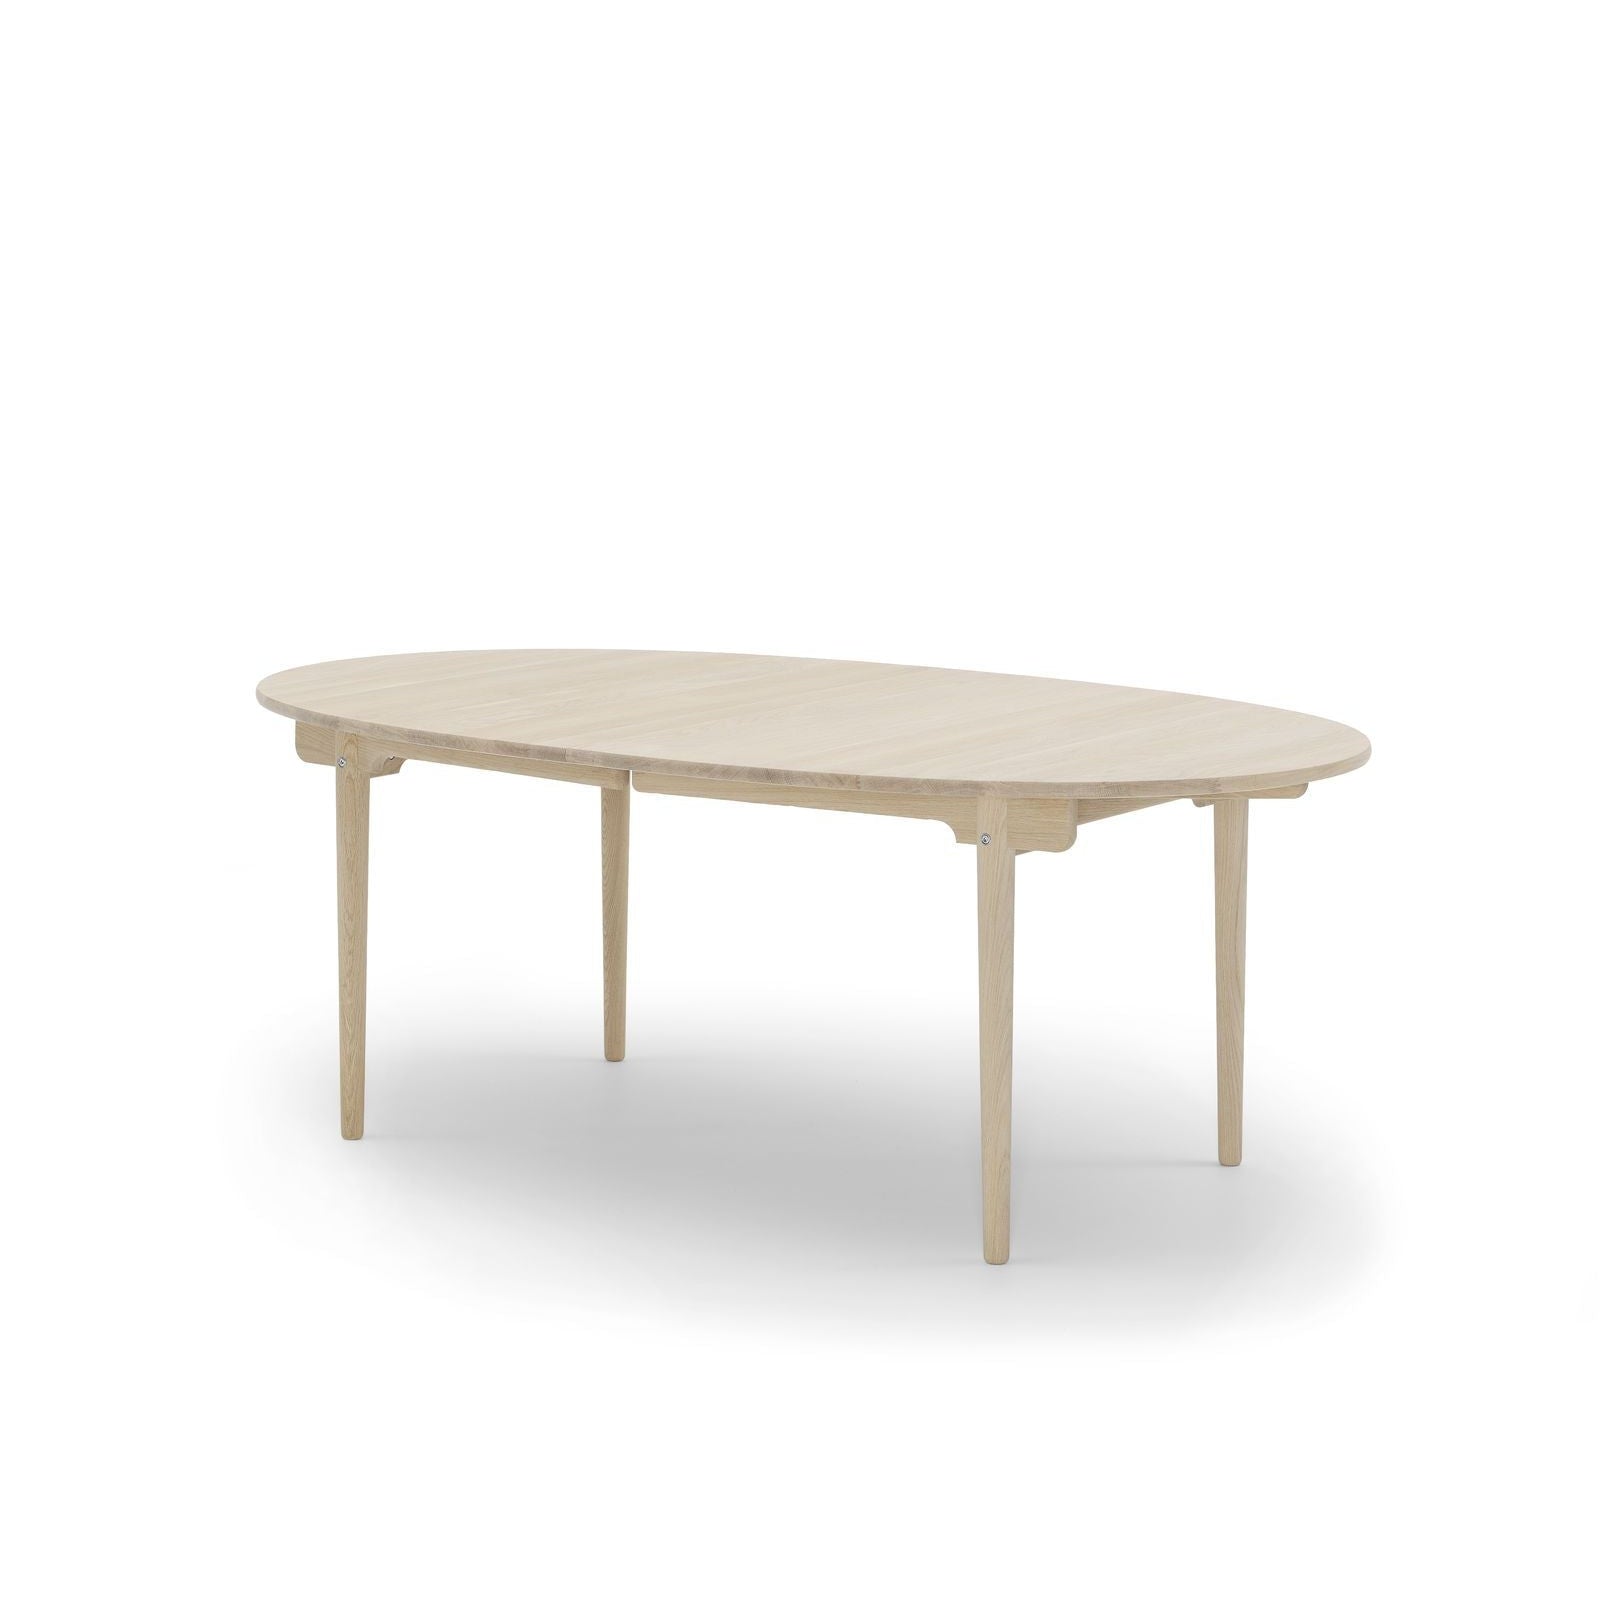 Carl Hansen CH338 matbord utan extra topp, vit oljad ek